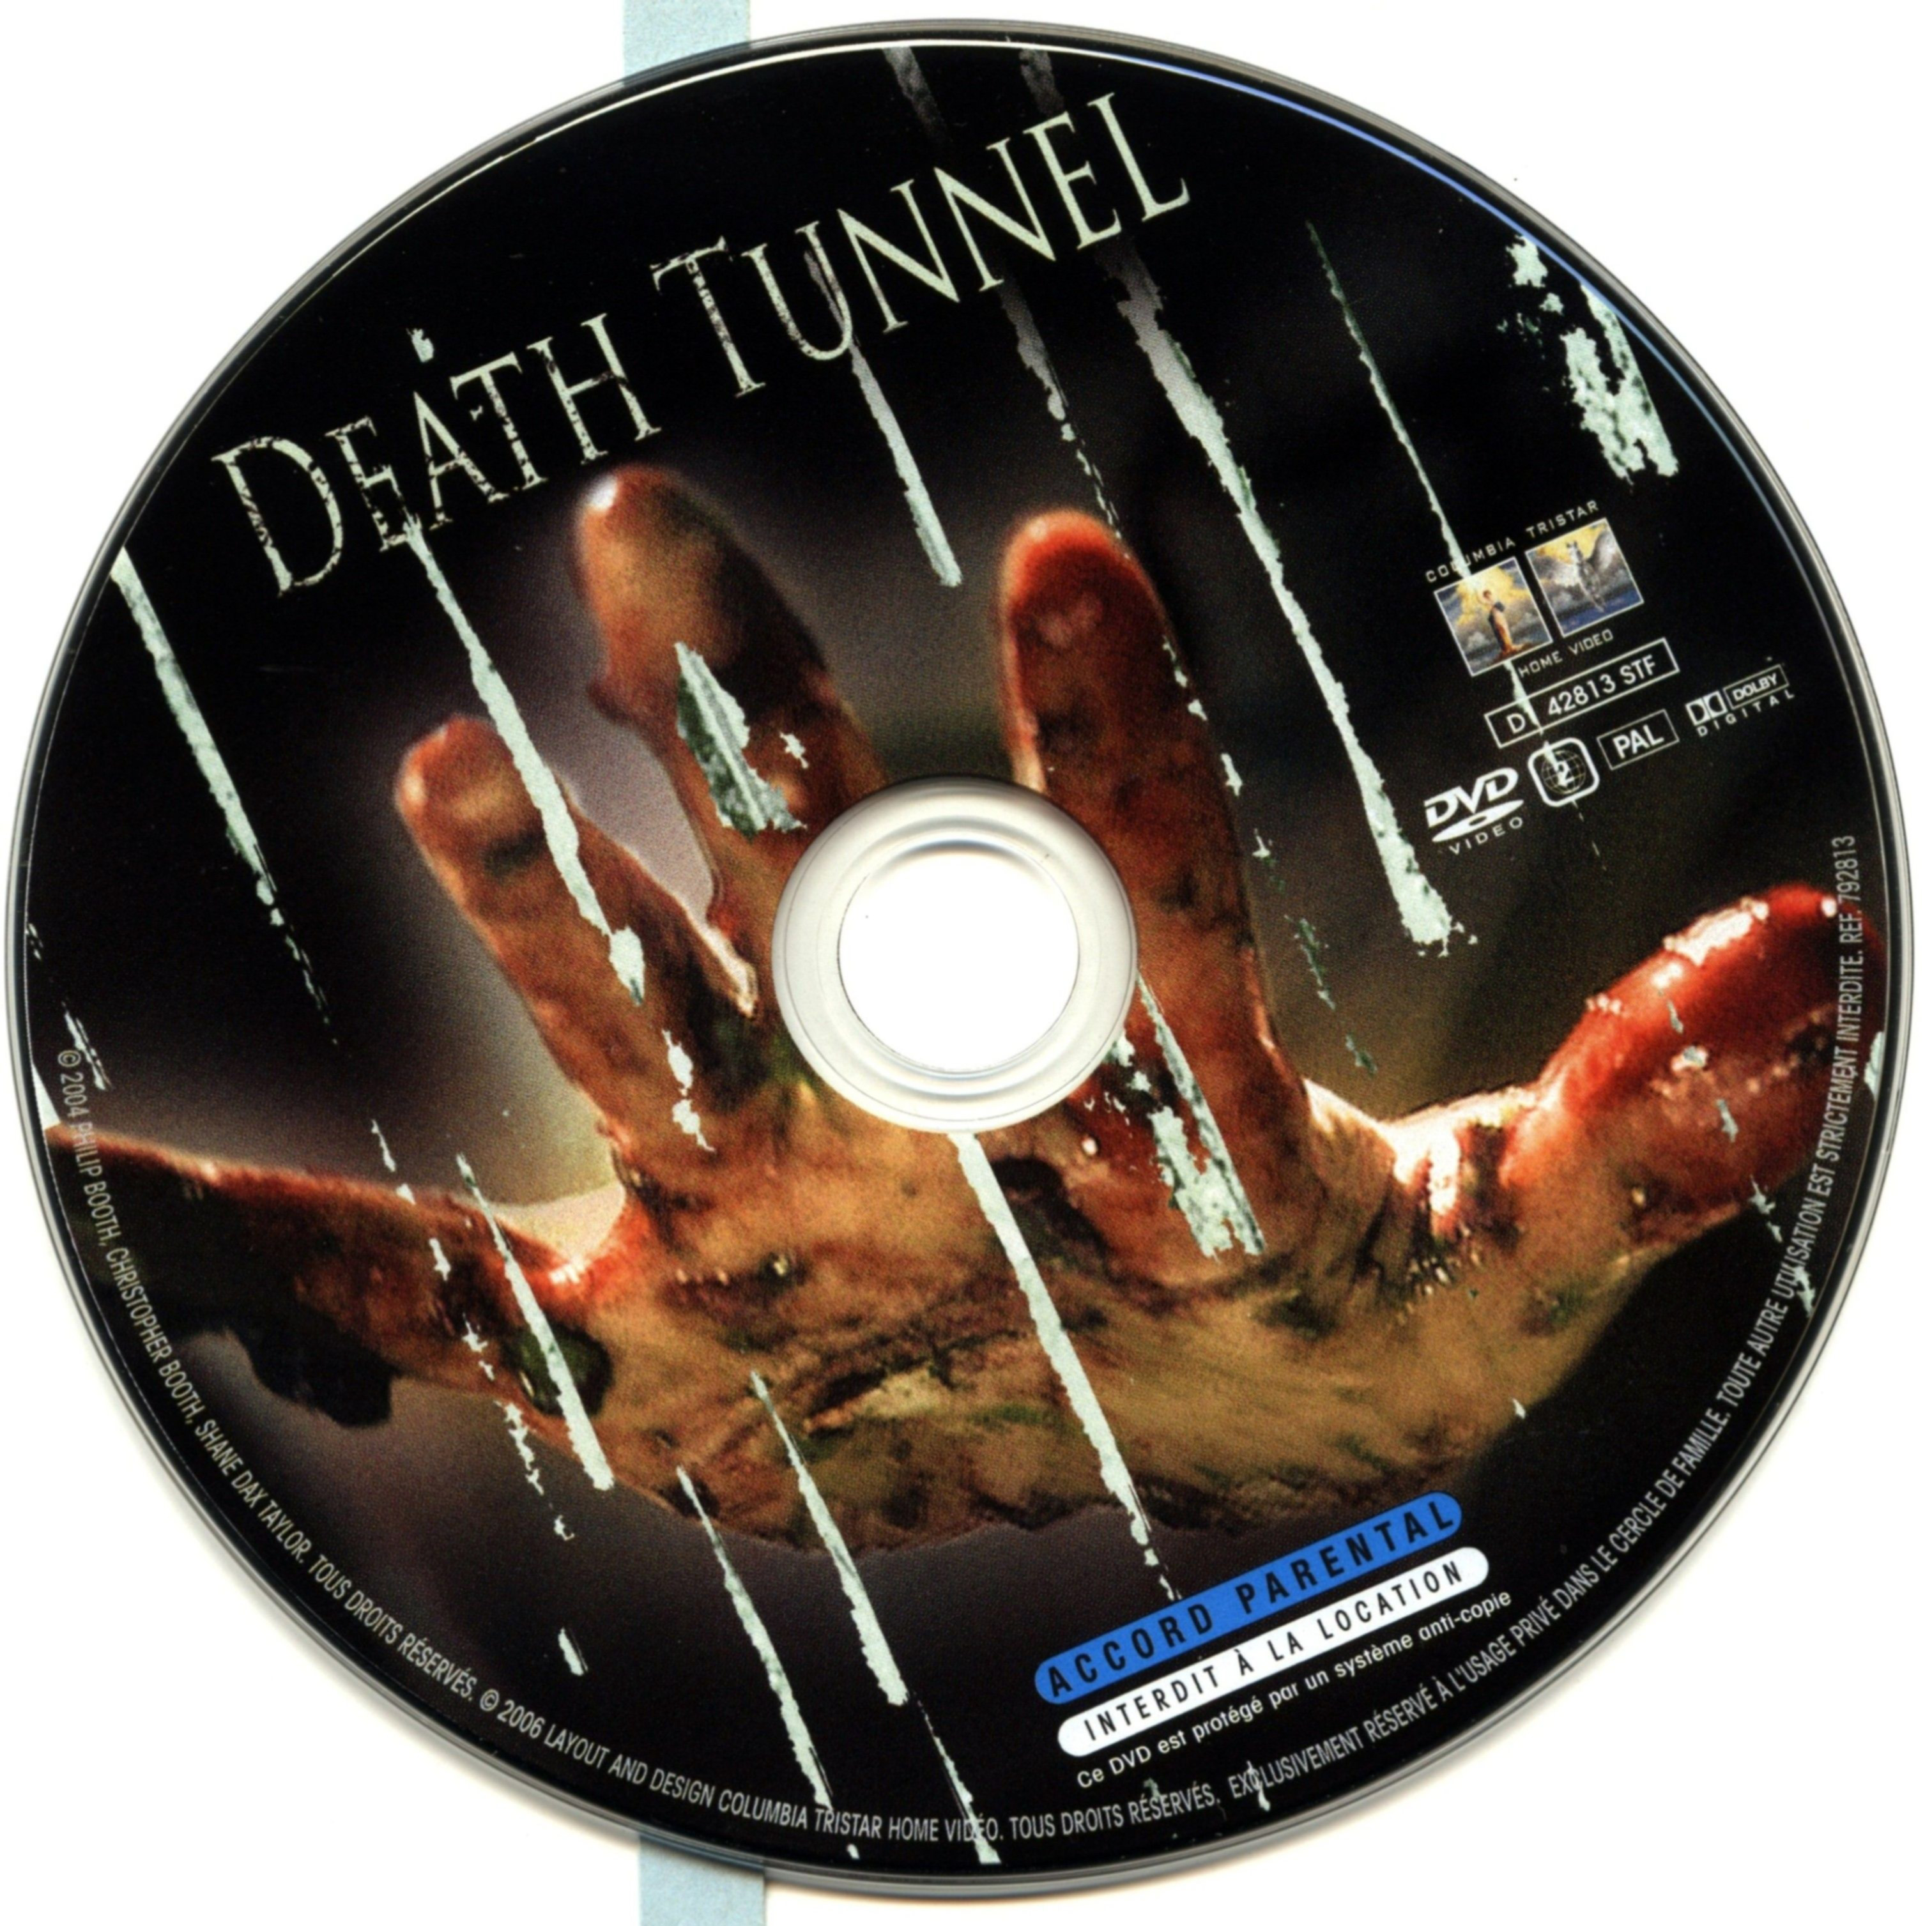 Death tunnel v2